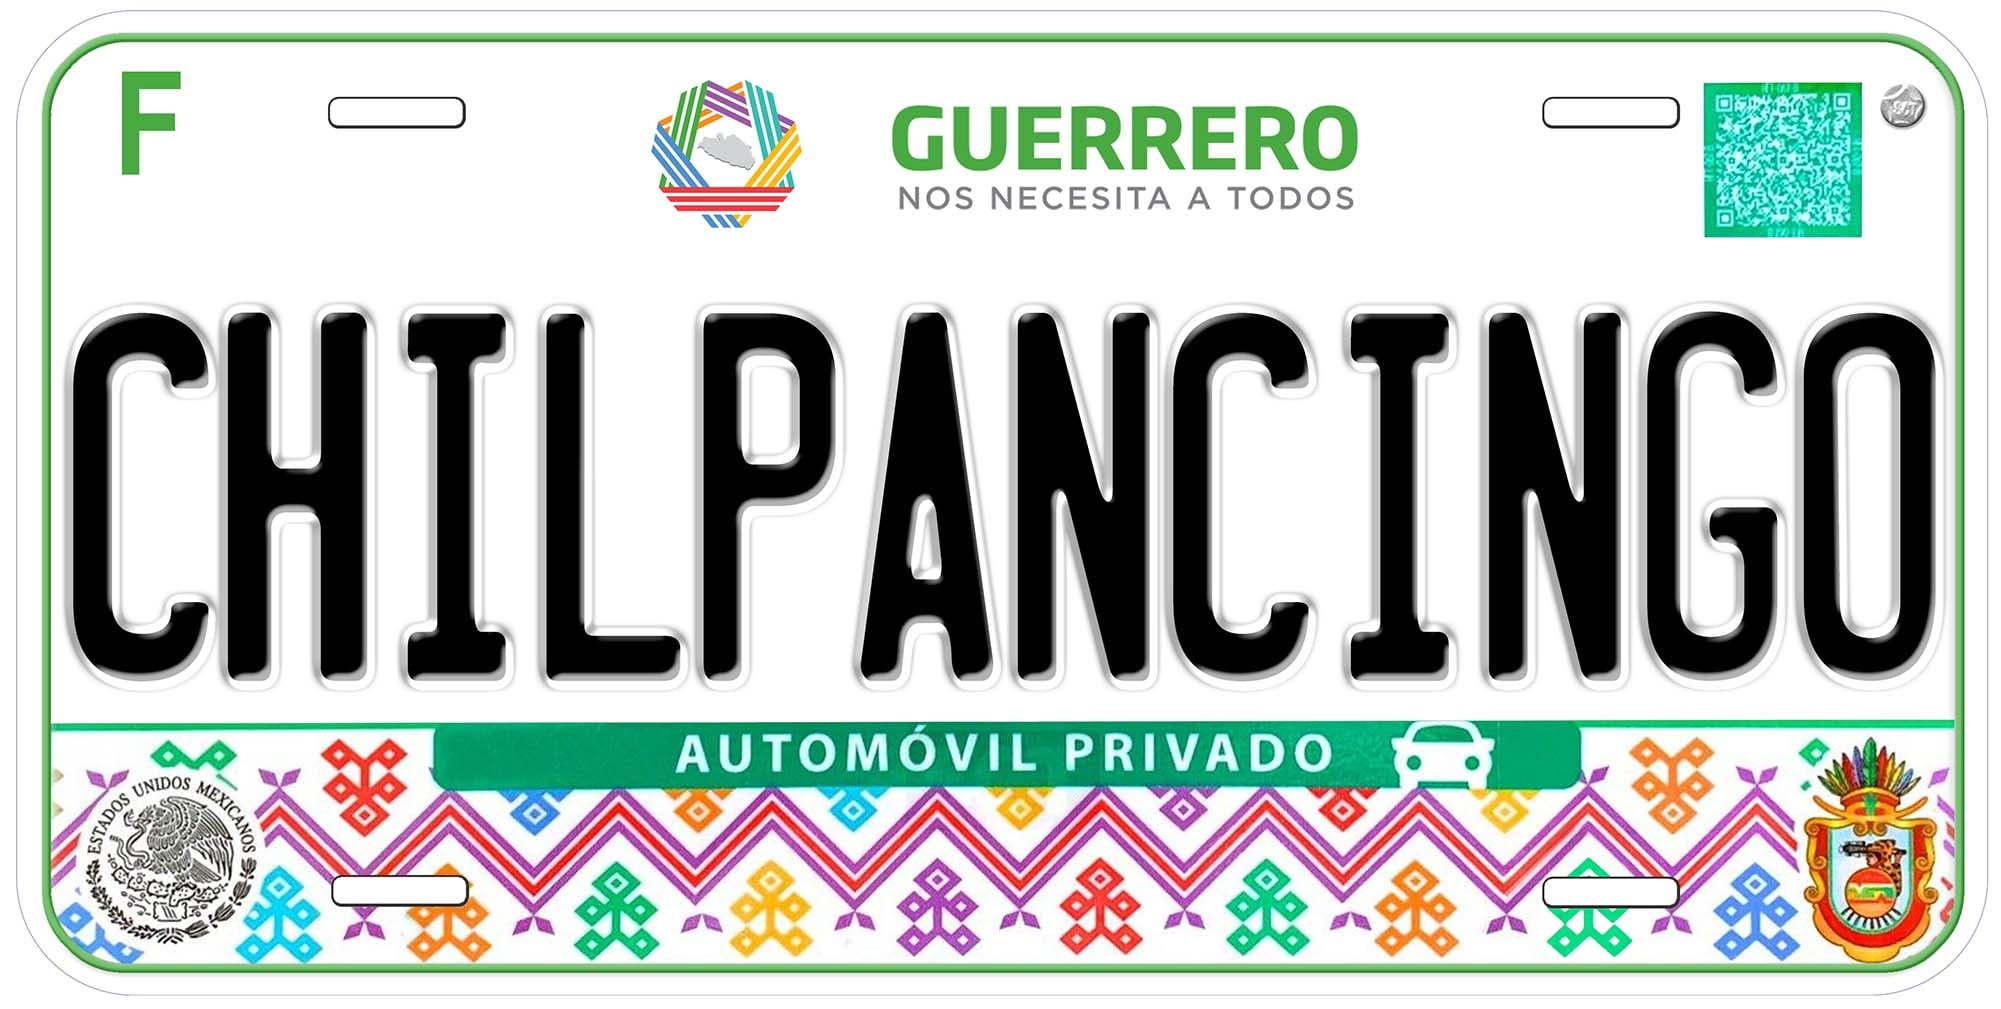 Chilpancingo Guerrero Mexico Novelty Car License Plate 